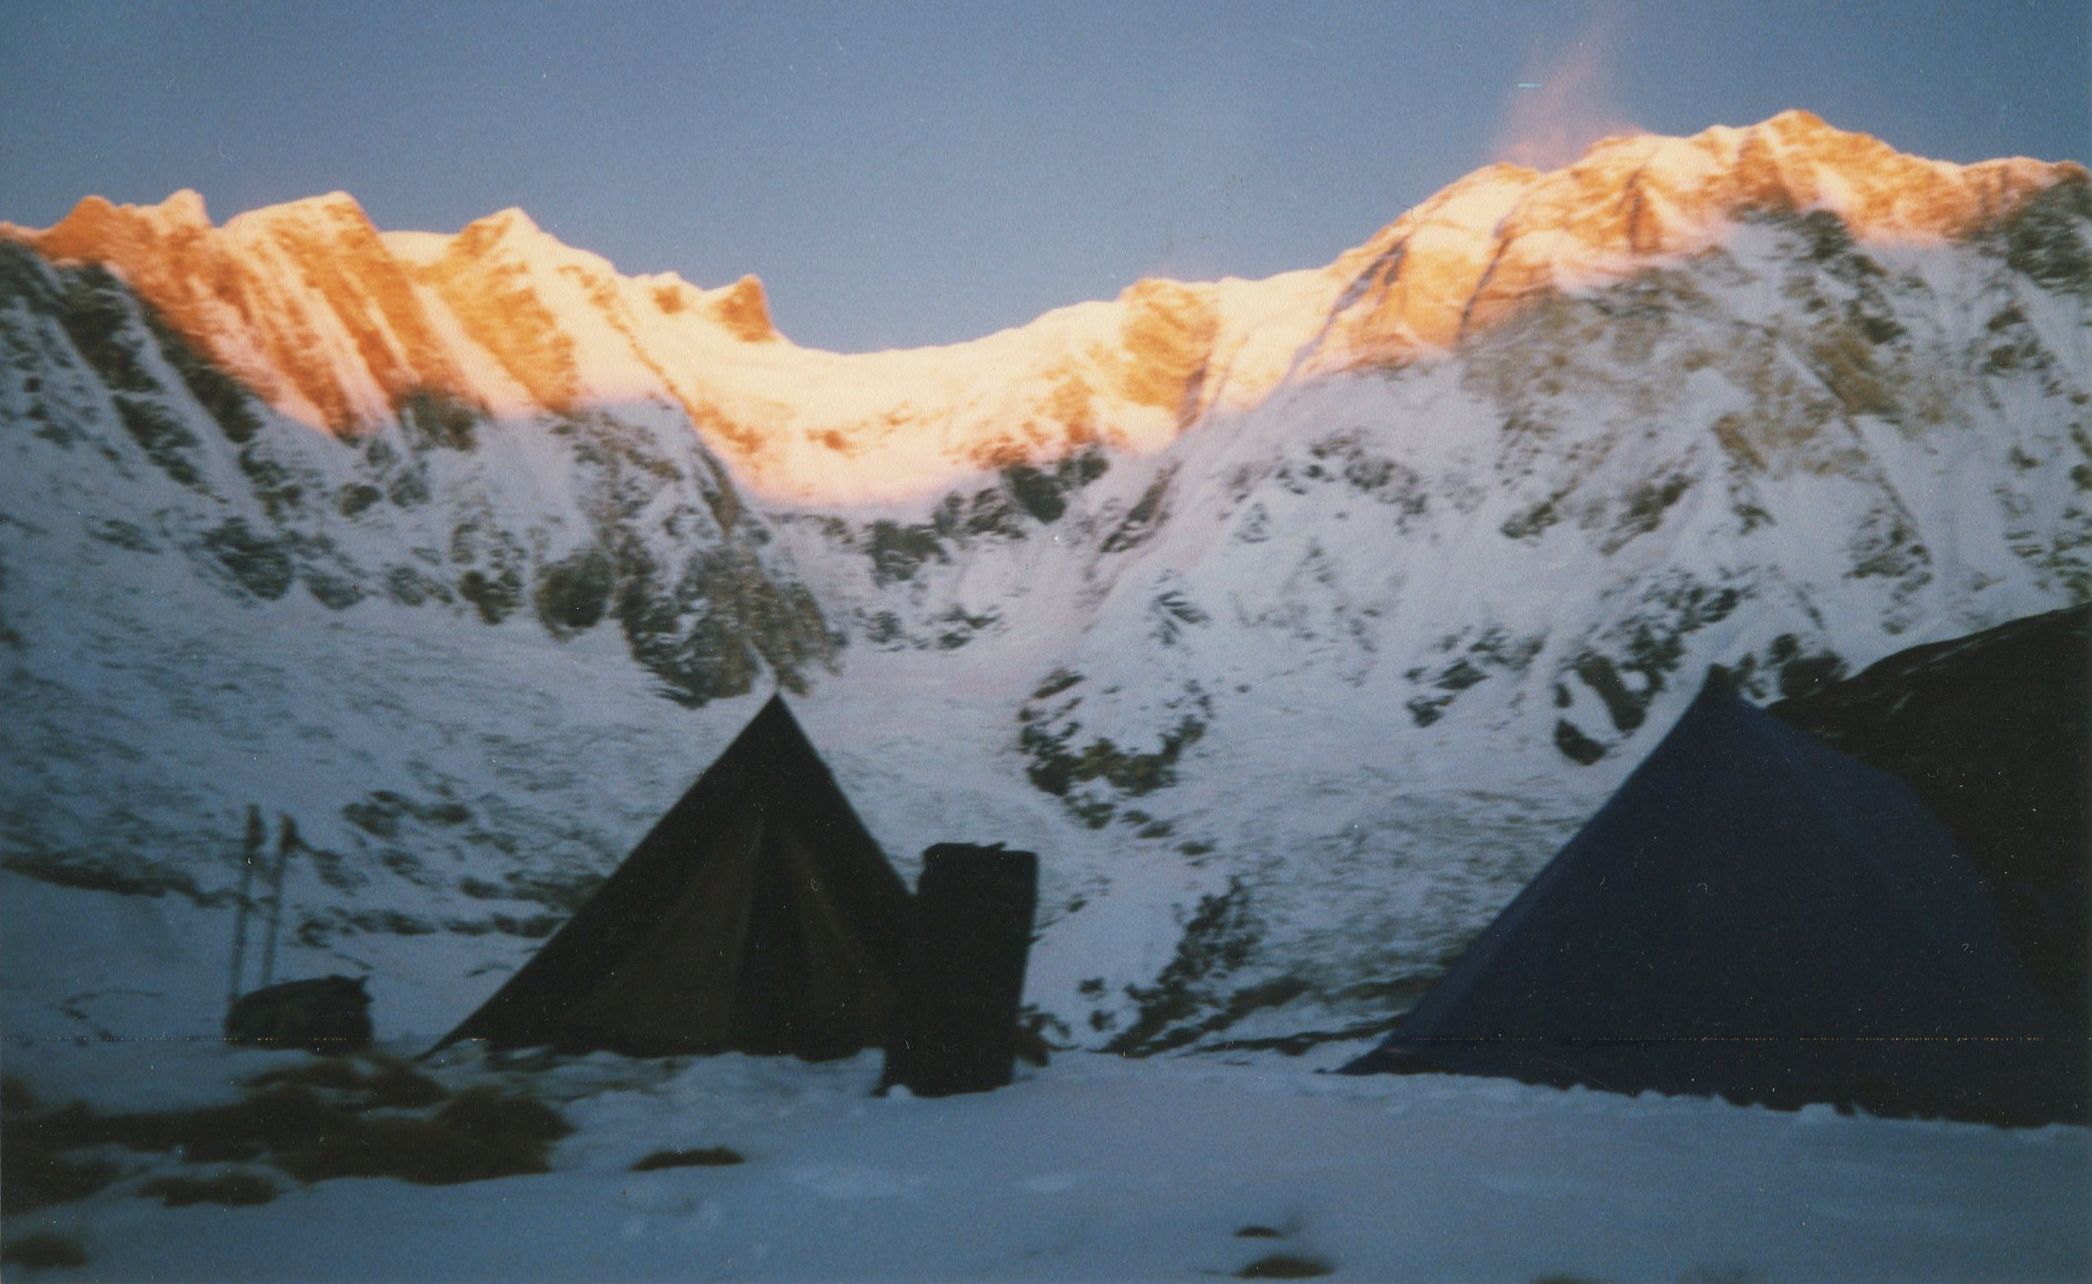 Sunrise on Fang and Annapurna I from Rakshi Peak high camp